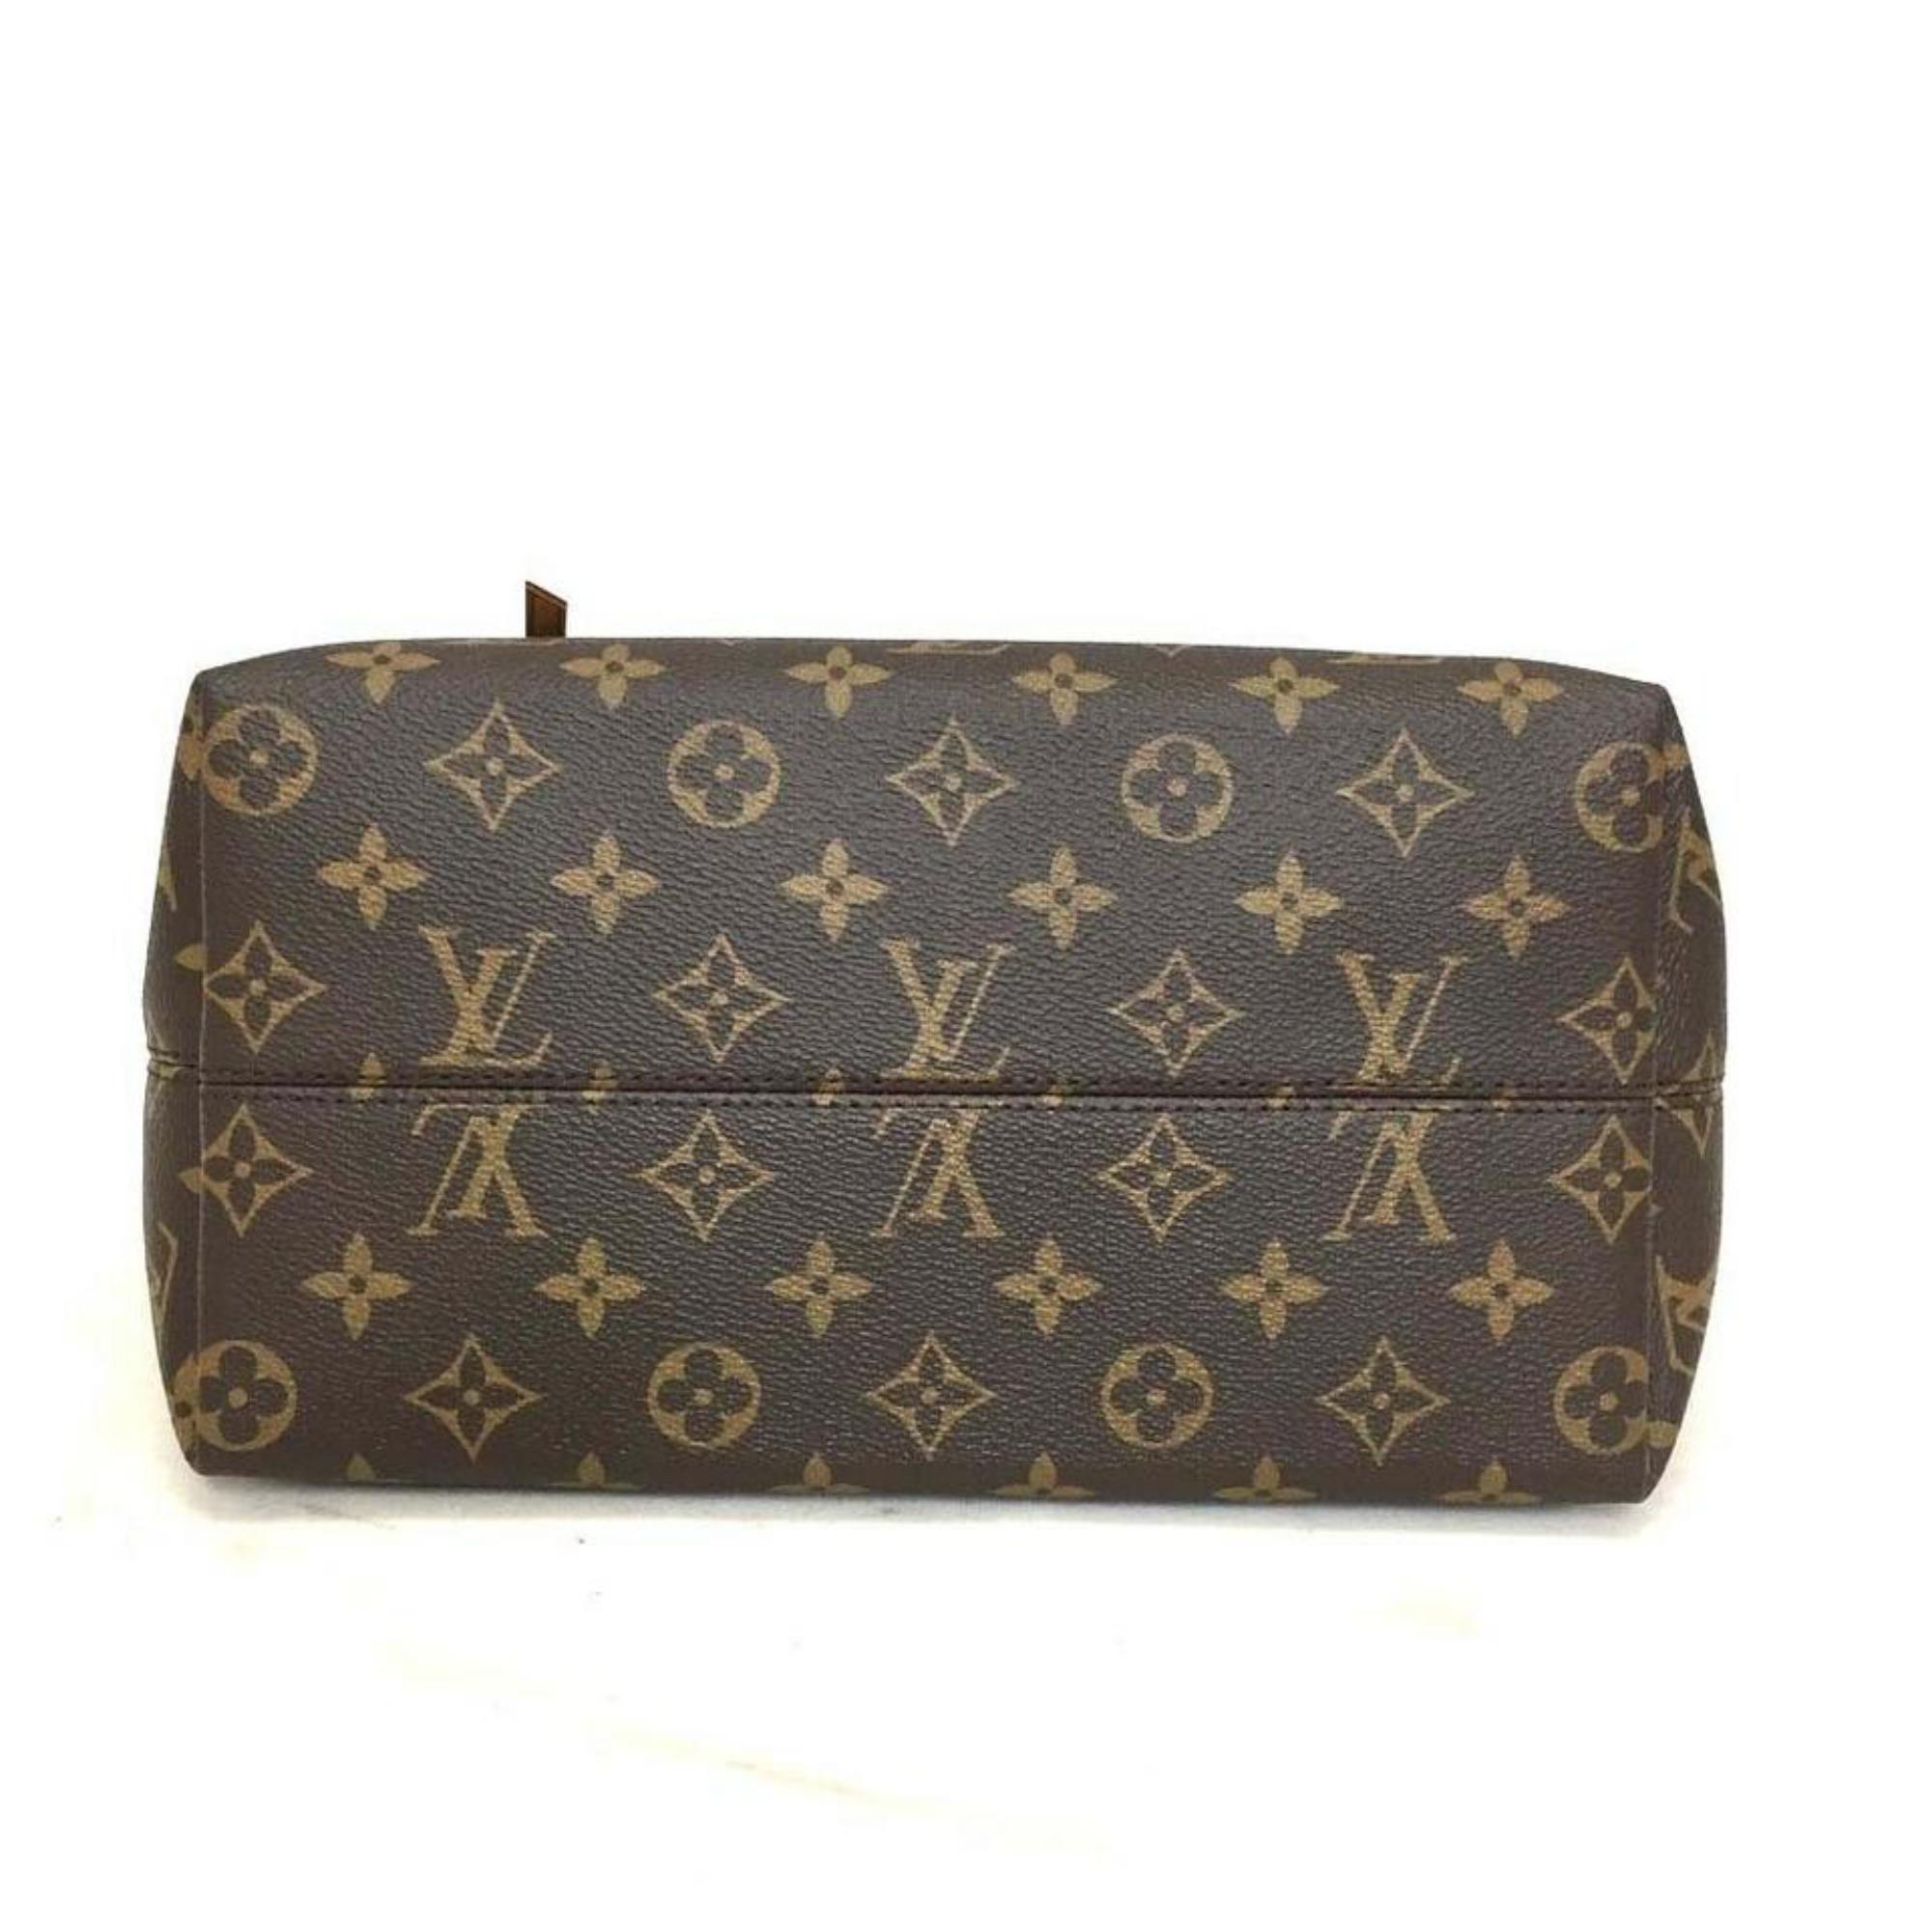 Louis Vuitton Iena Monogram Pm Zip Tote 870371 Brown Coated Canvas Shoulder Bag For Sale 5